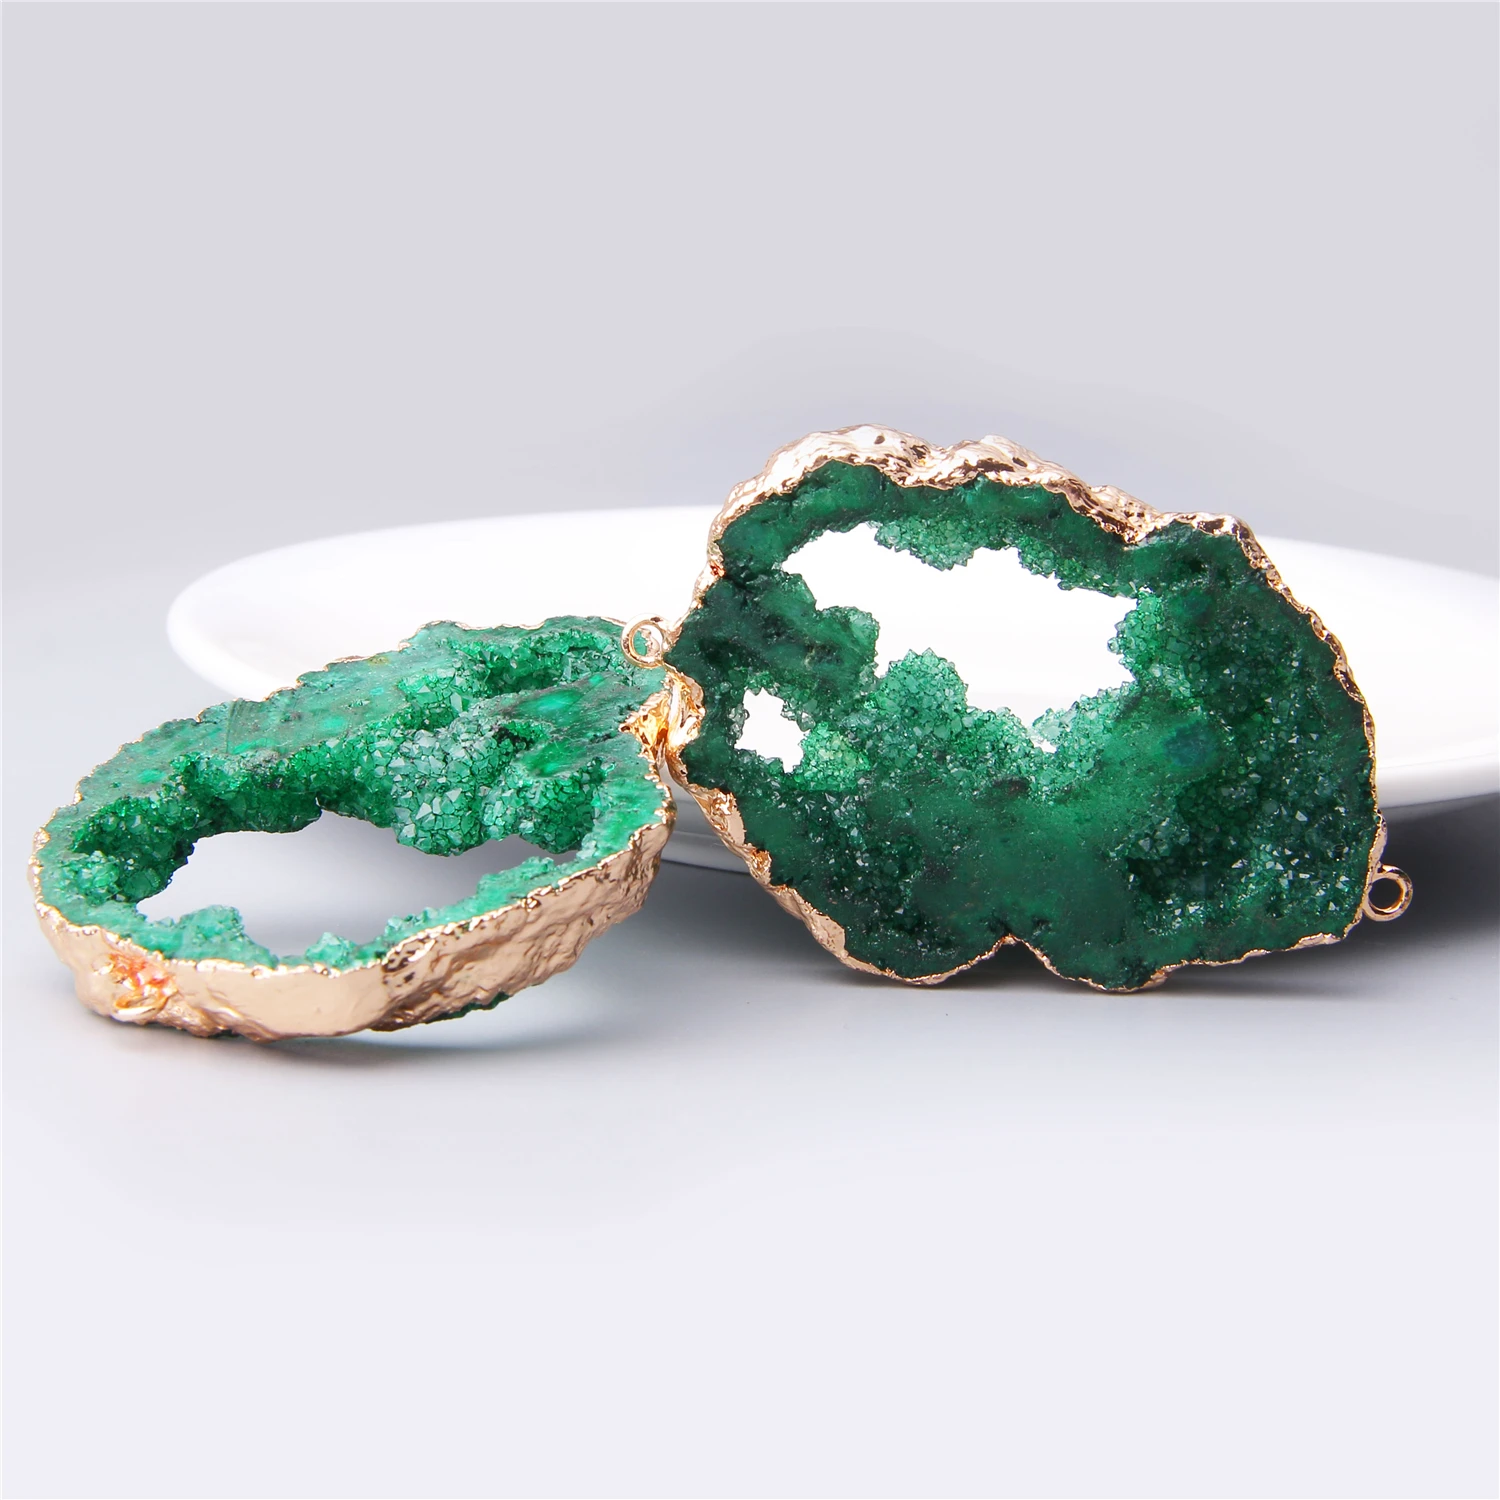 Irregular green Quartz Crystal Natural Druzy Agates Pendants natural green Stone quartz Connector DIY Jewelry Making handmade